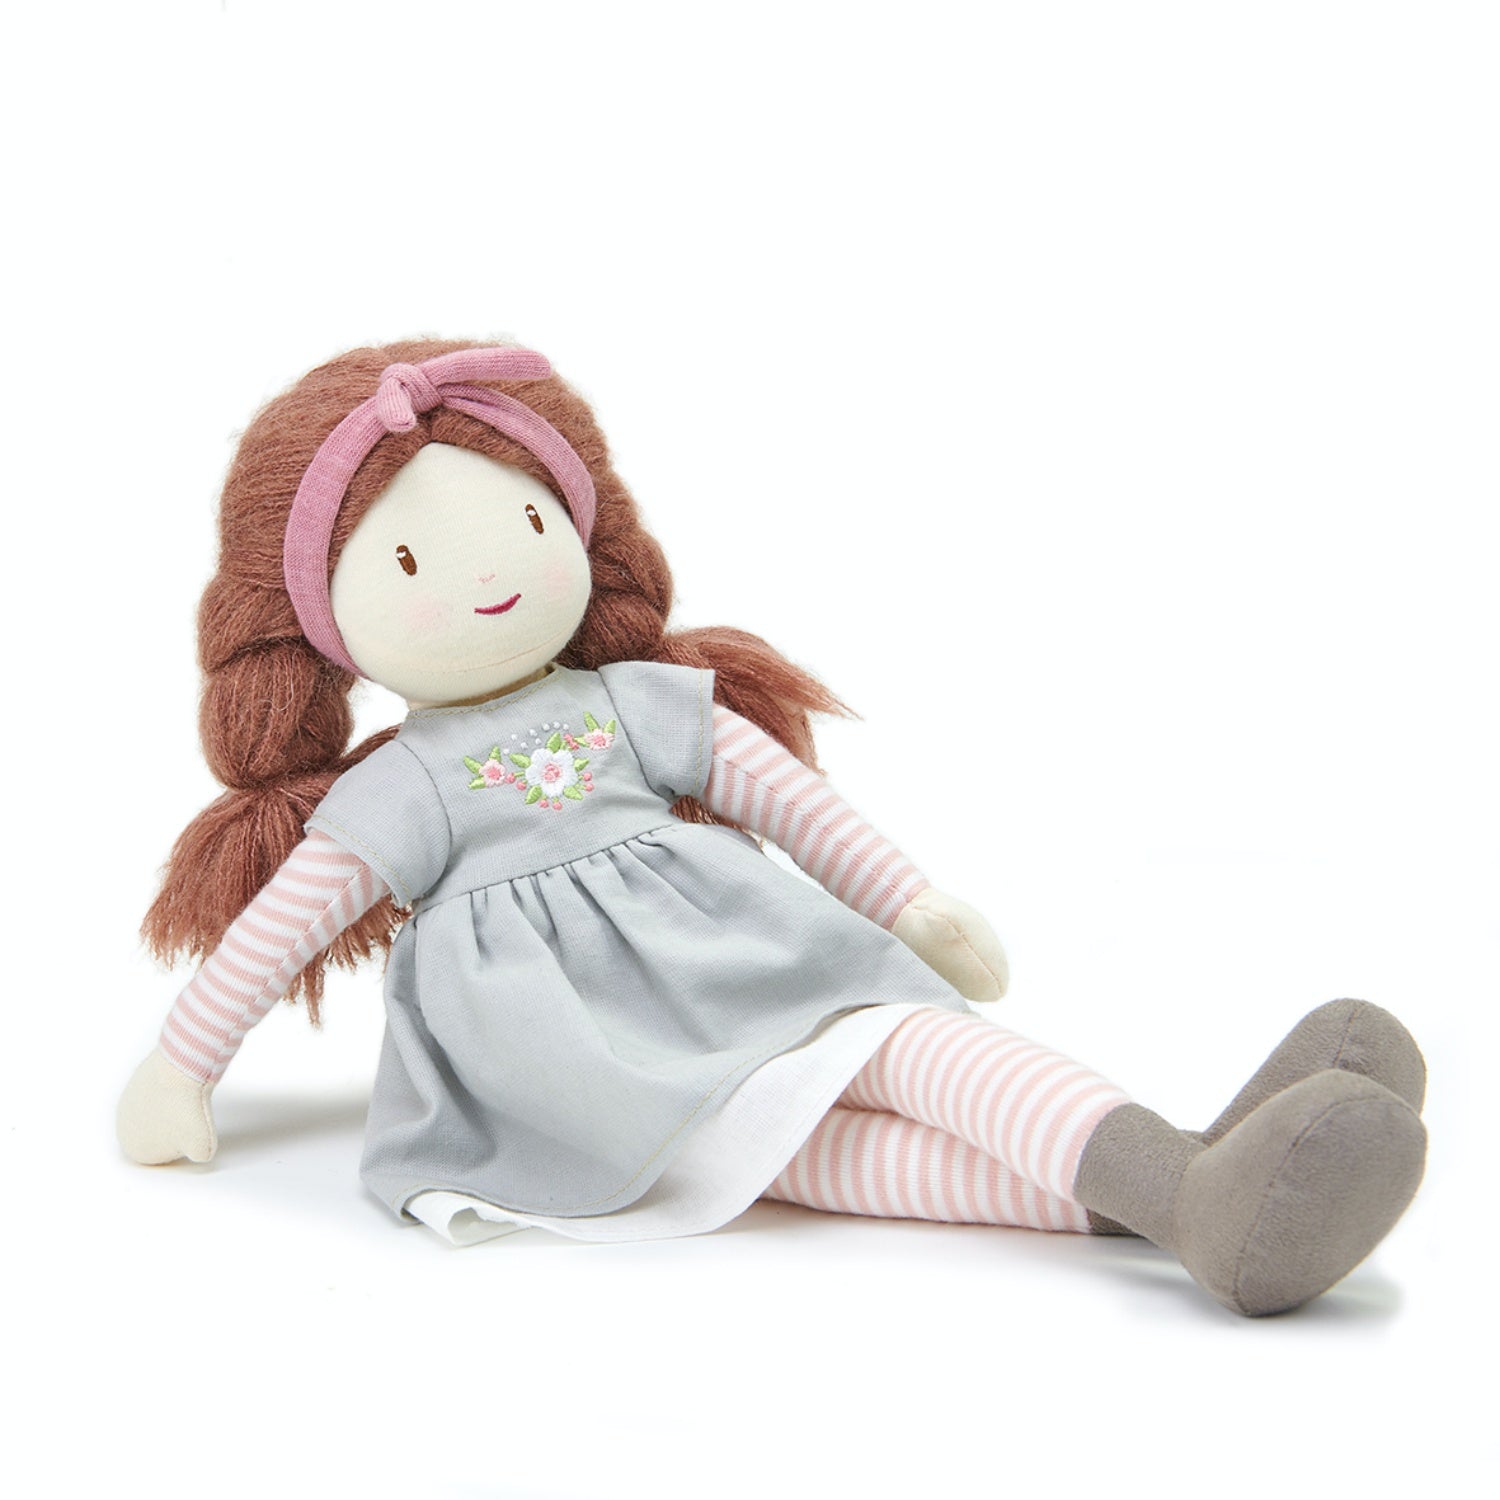 ThreadBear Design Alma Autumn Rag Doll | Hand-Crafted Rag Doll | Soft Cotton Children’s Doll | Front View – Rag Doll Alma Sitting | BeoVERDE.ie